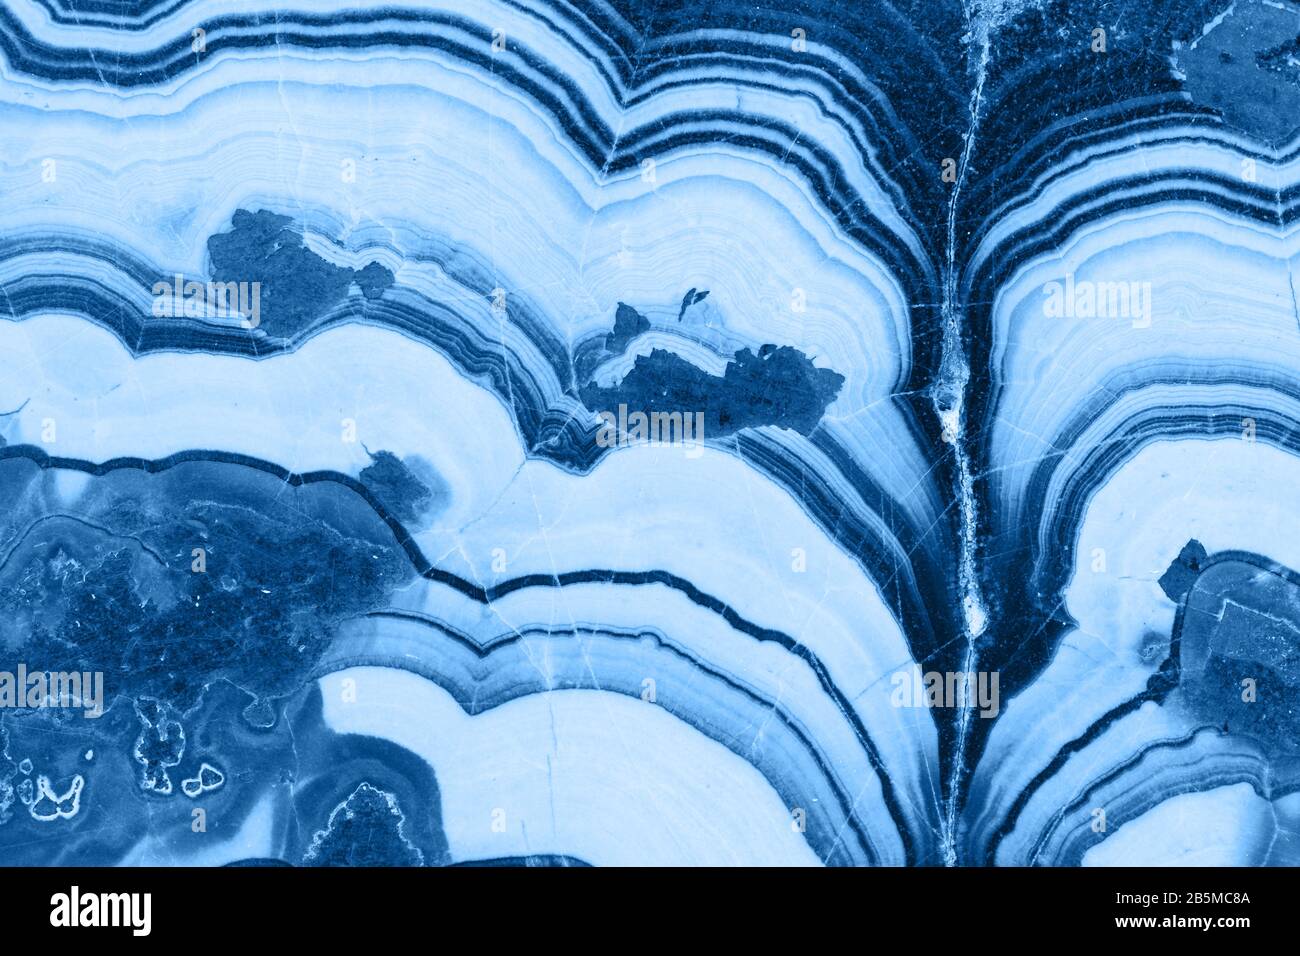 Querschnitt des abstrakten Fantasy-Minerals, Farbe des pantone-klassikers 19-4052 aus dem Jahr 2020 Stockfoto